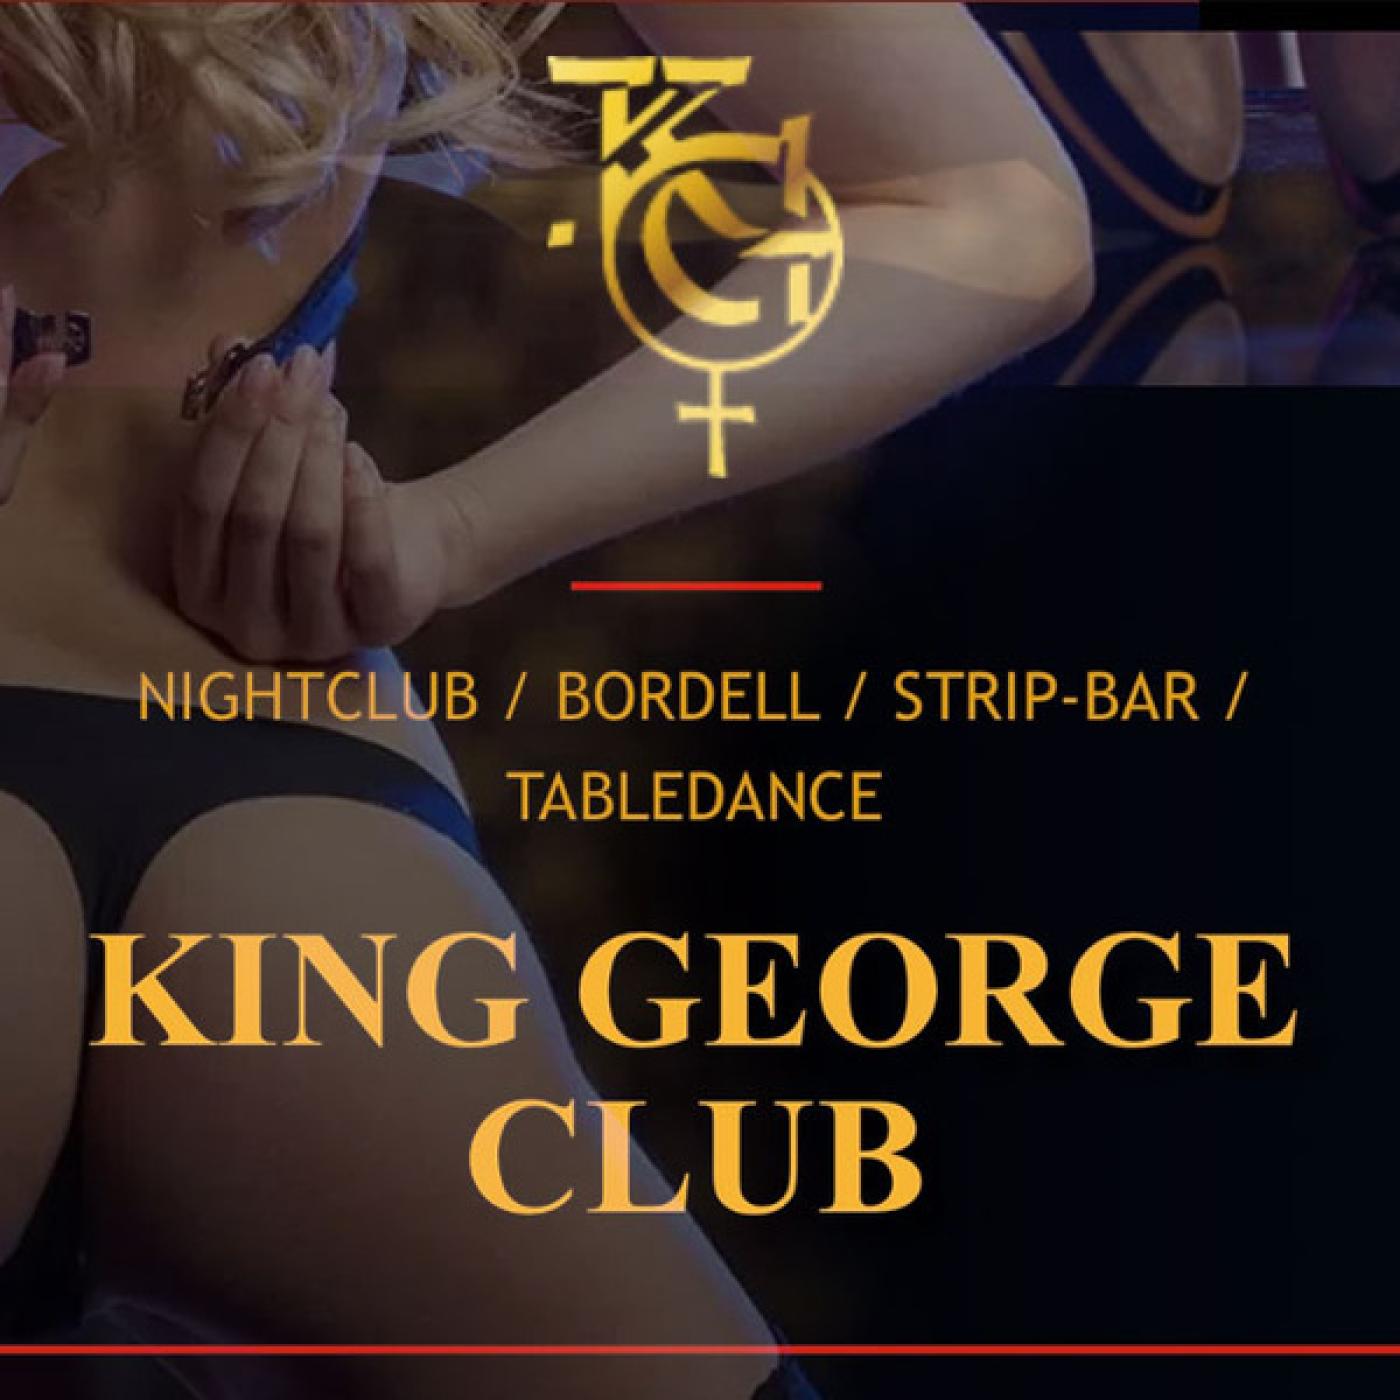 King George Club